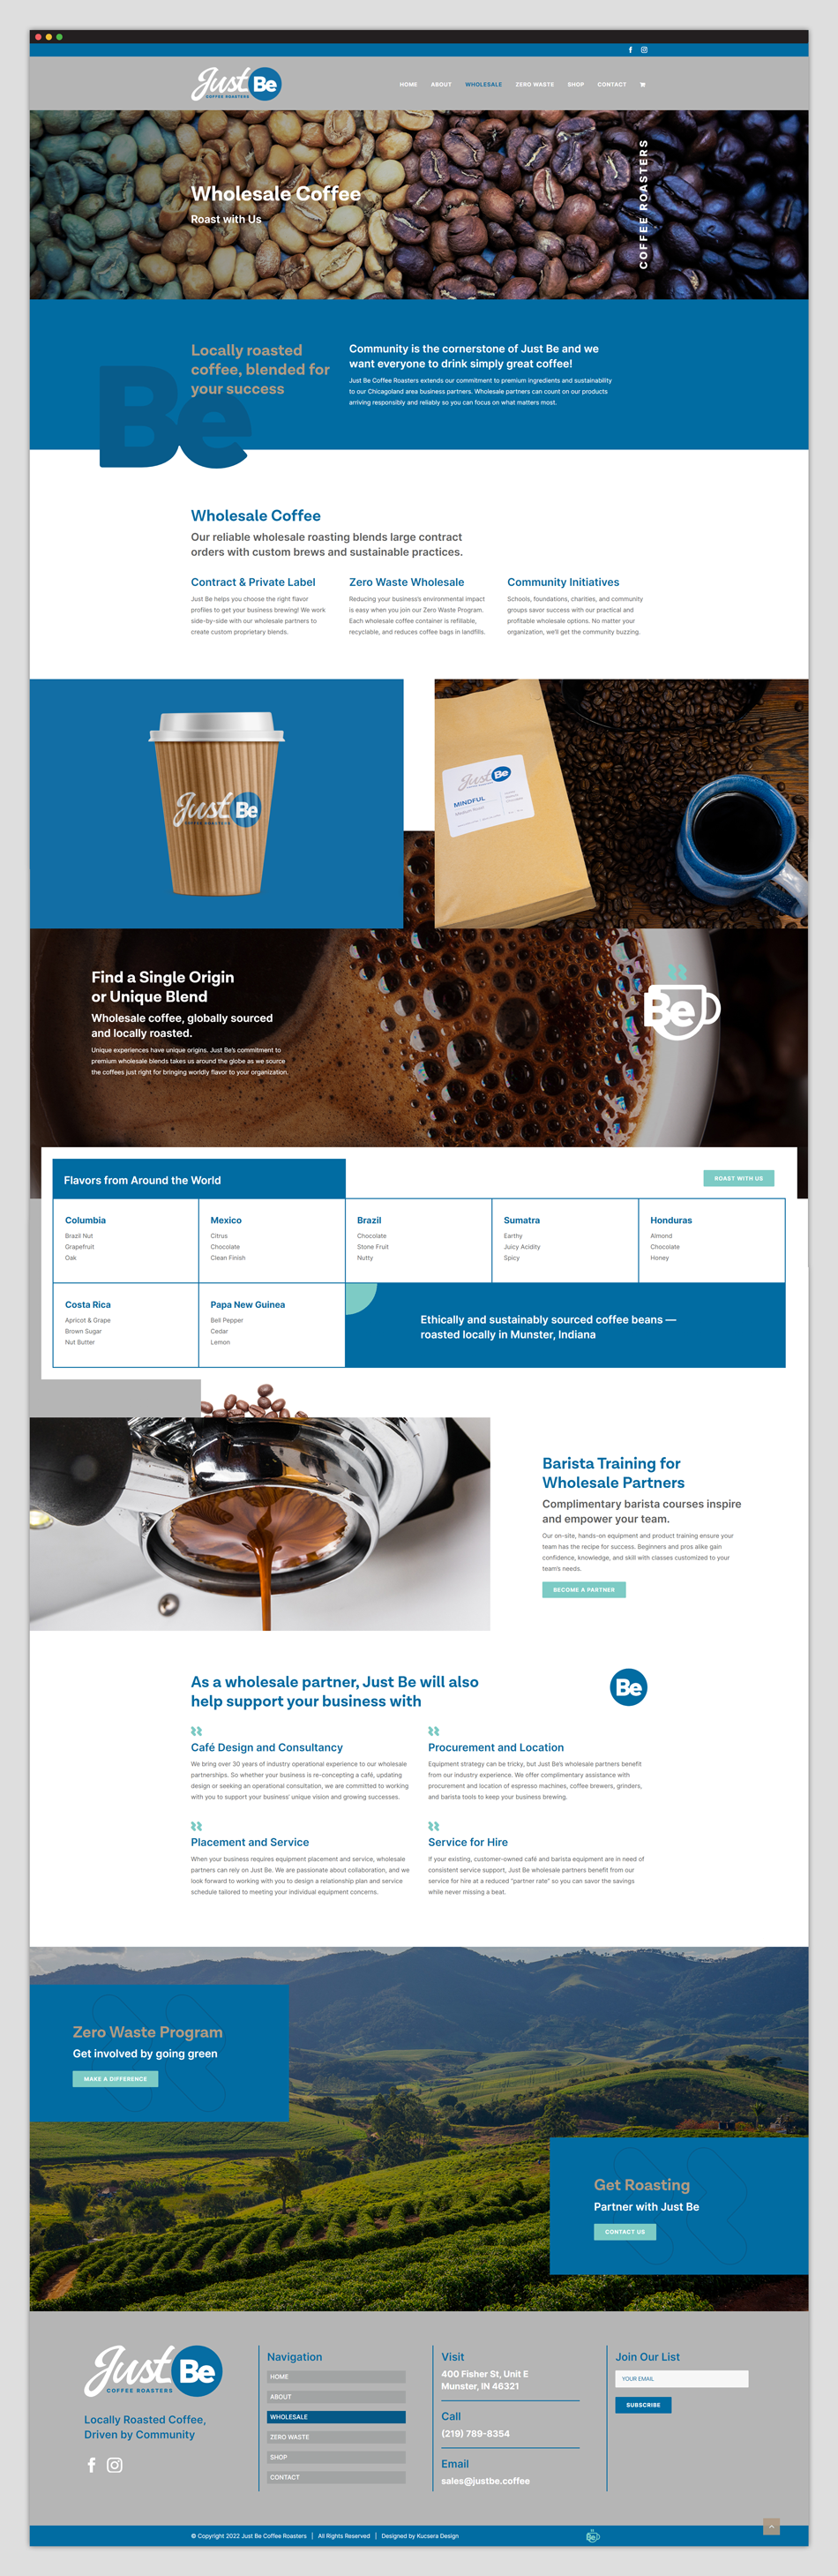 Wholesale Coffee website design